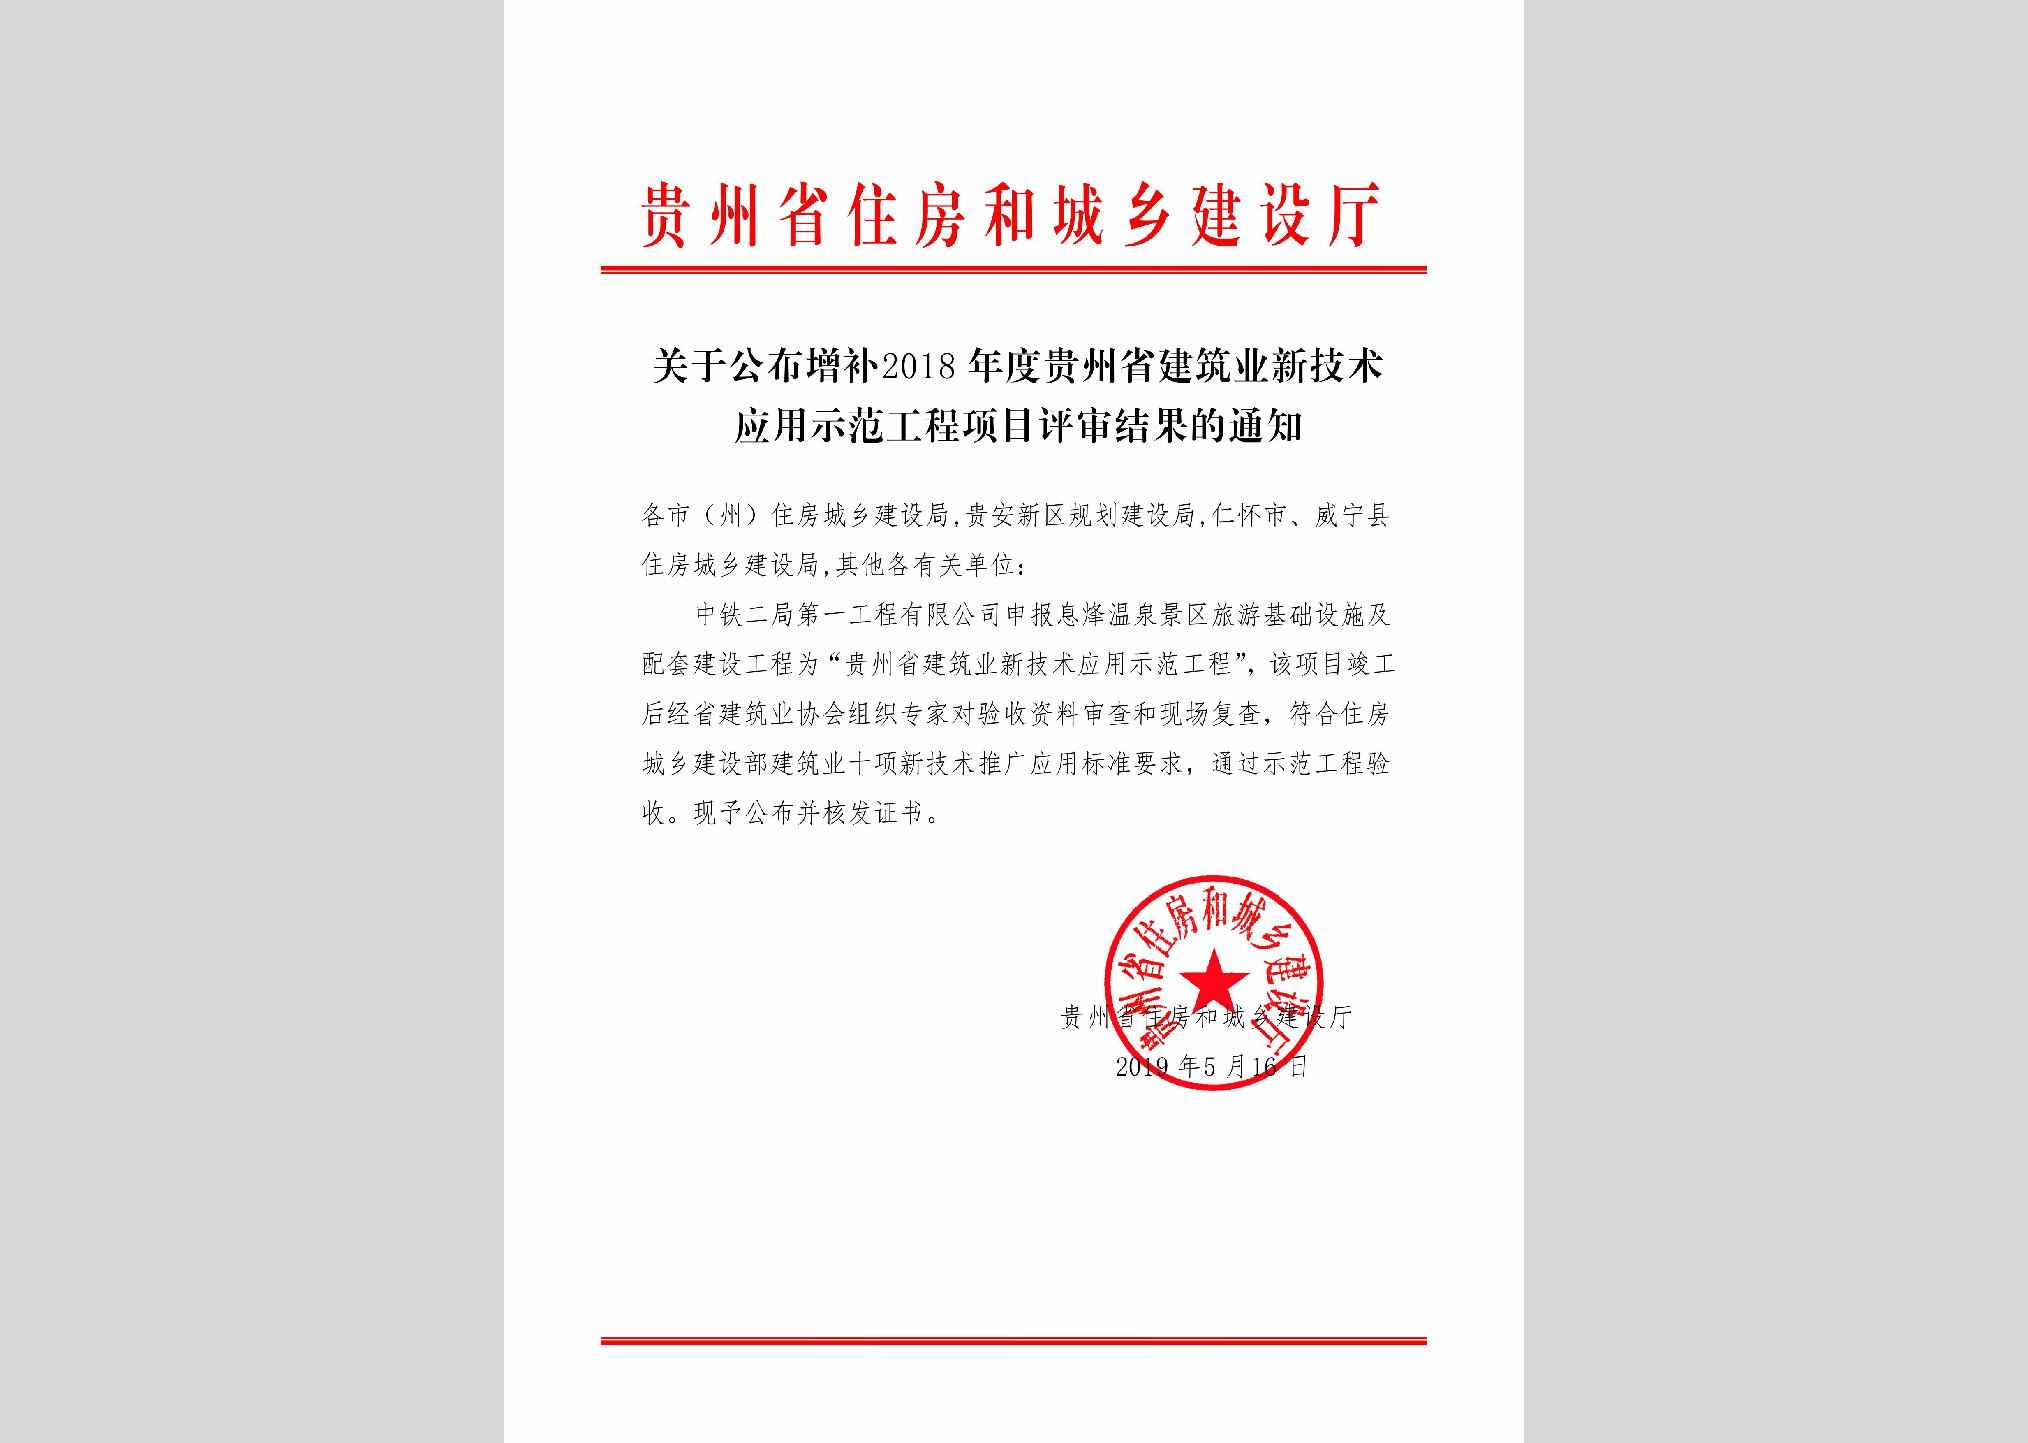 GZ-JZYXJSYY-2019：关于公布增补2018年度贵州省建筑业新技术应用示范工程项目评审结果的通知